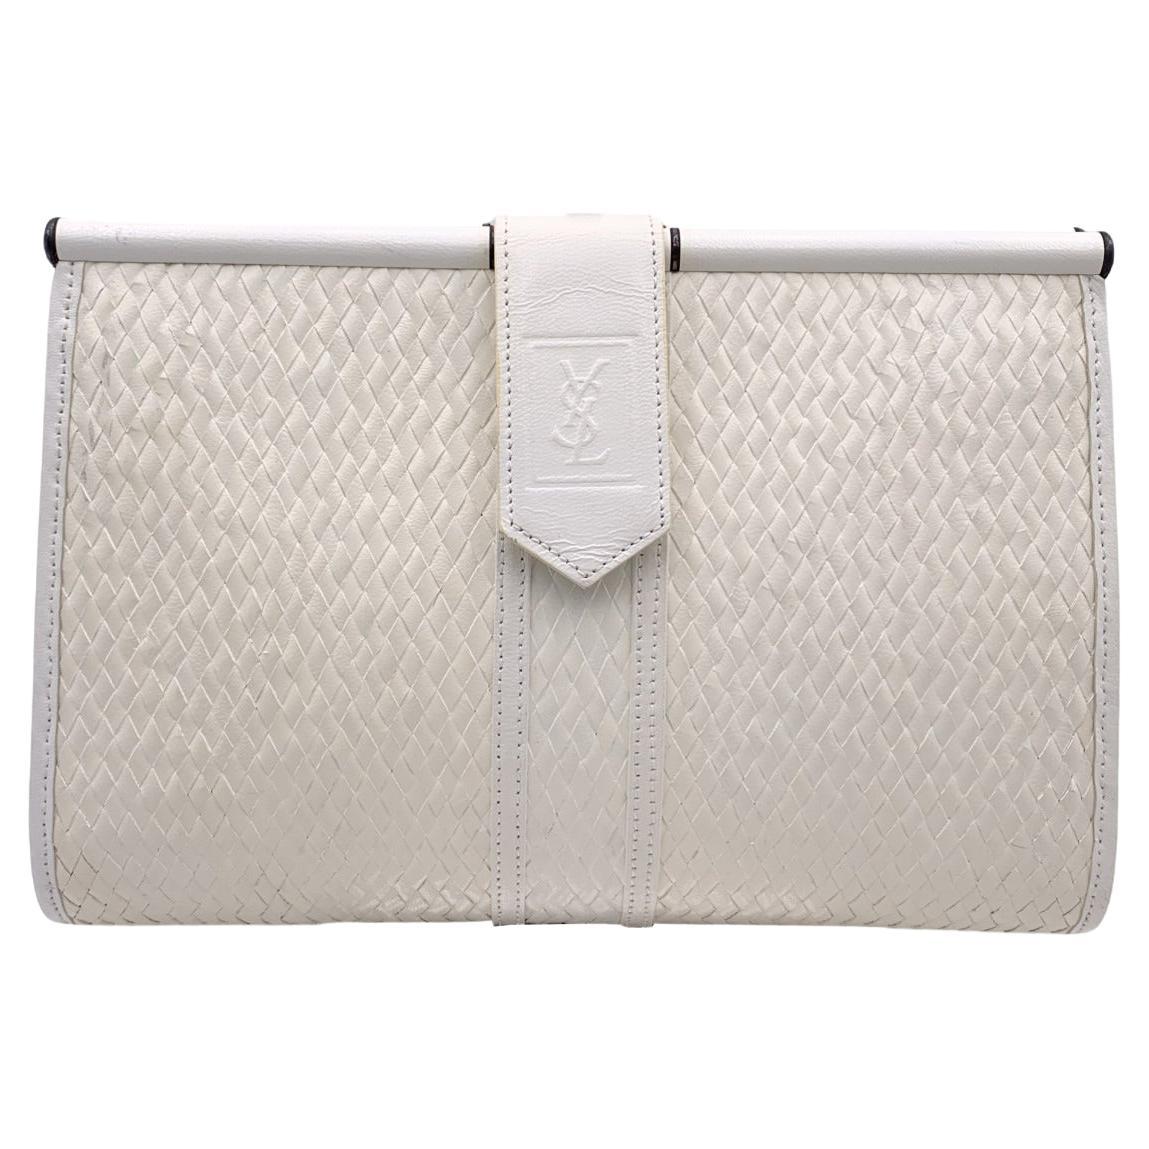 Yves Saint Laurent Vintage White Woven Leather Clutch Bag Handbag